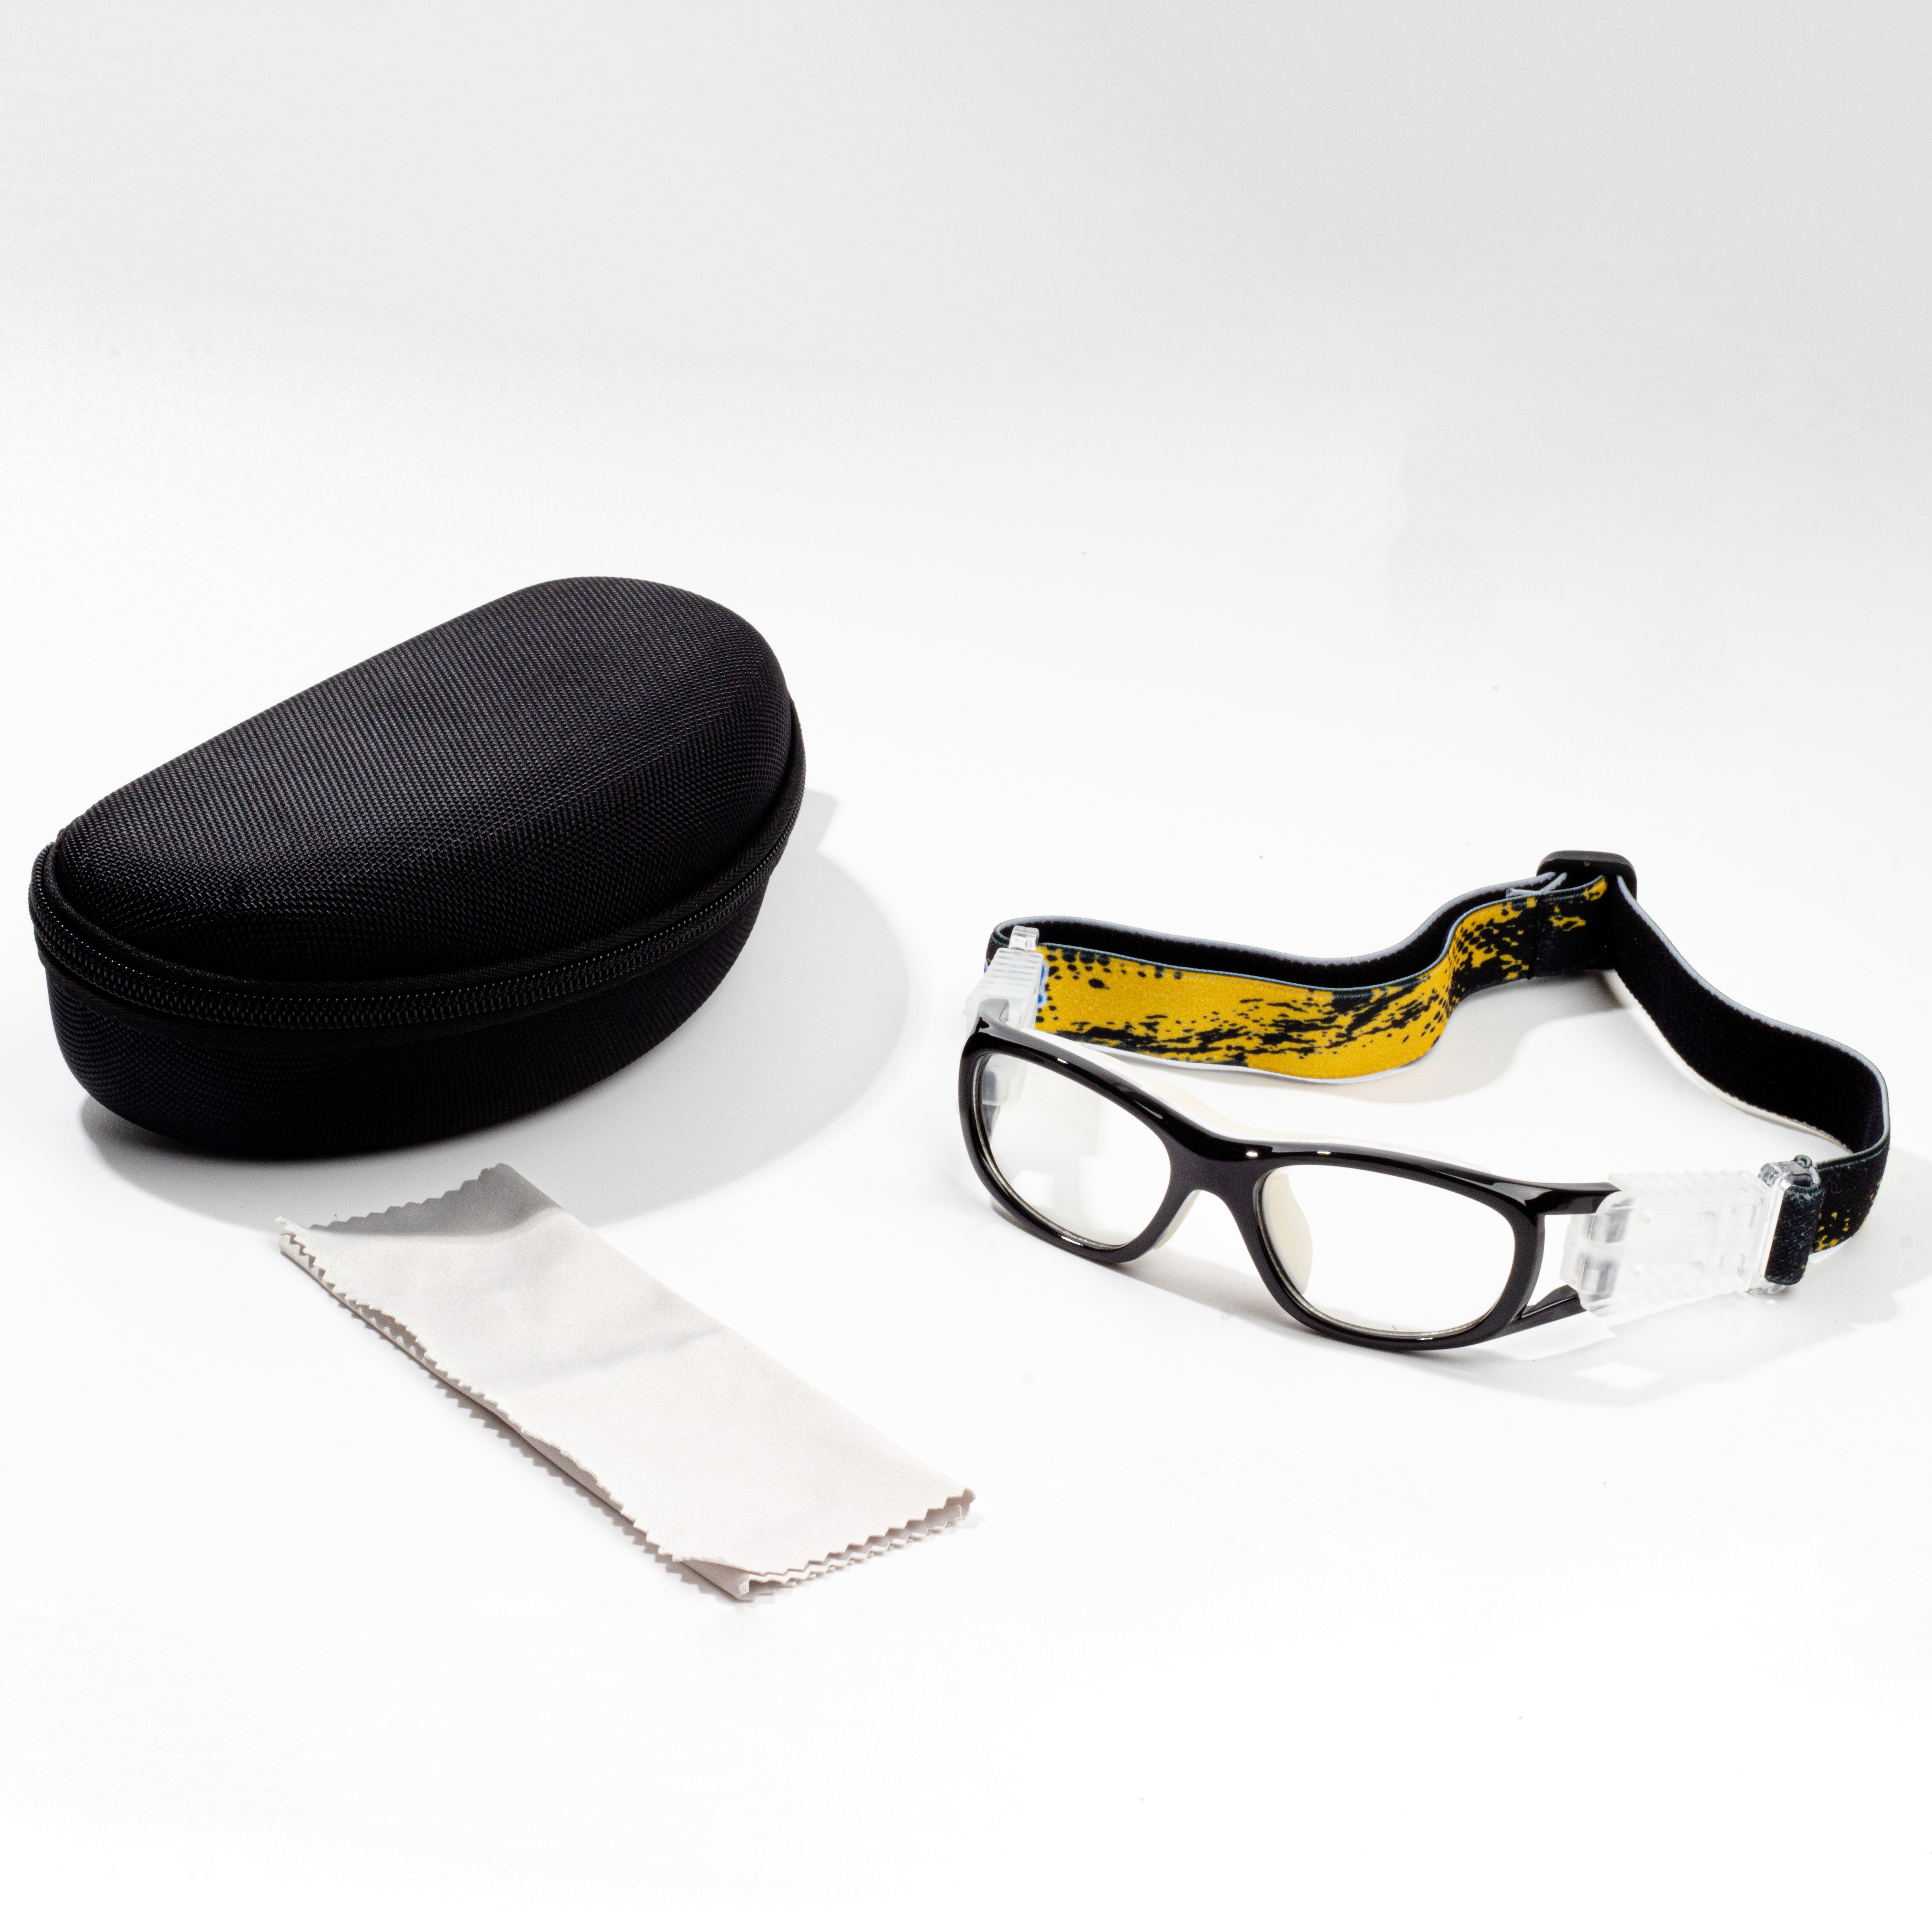 ochelari de baschet se potrivesc cu ochelari de protecție pentru baschet